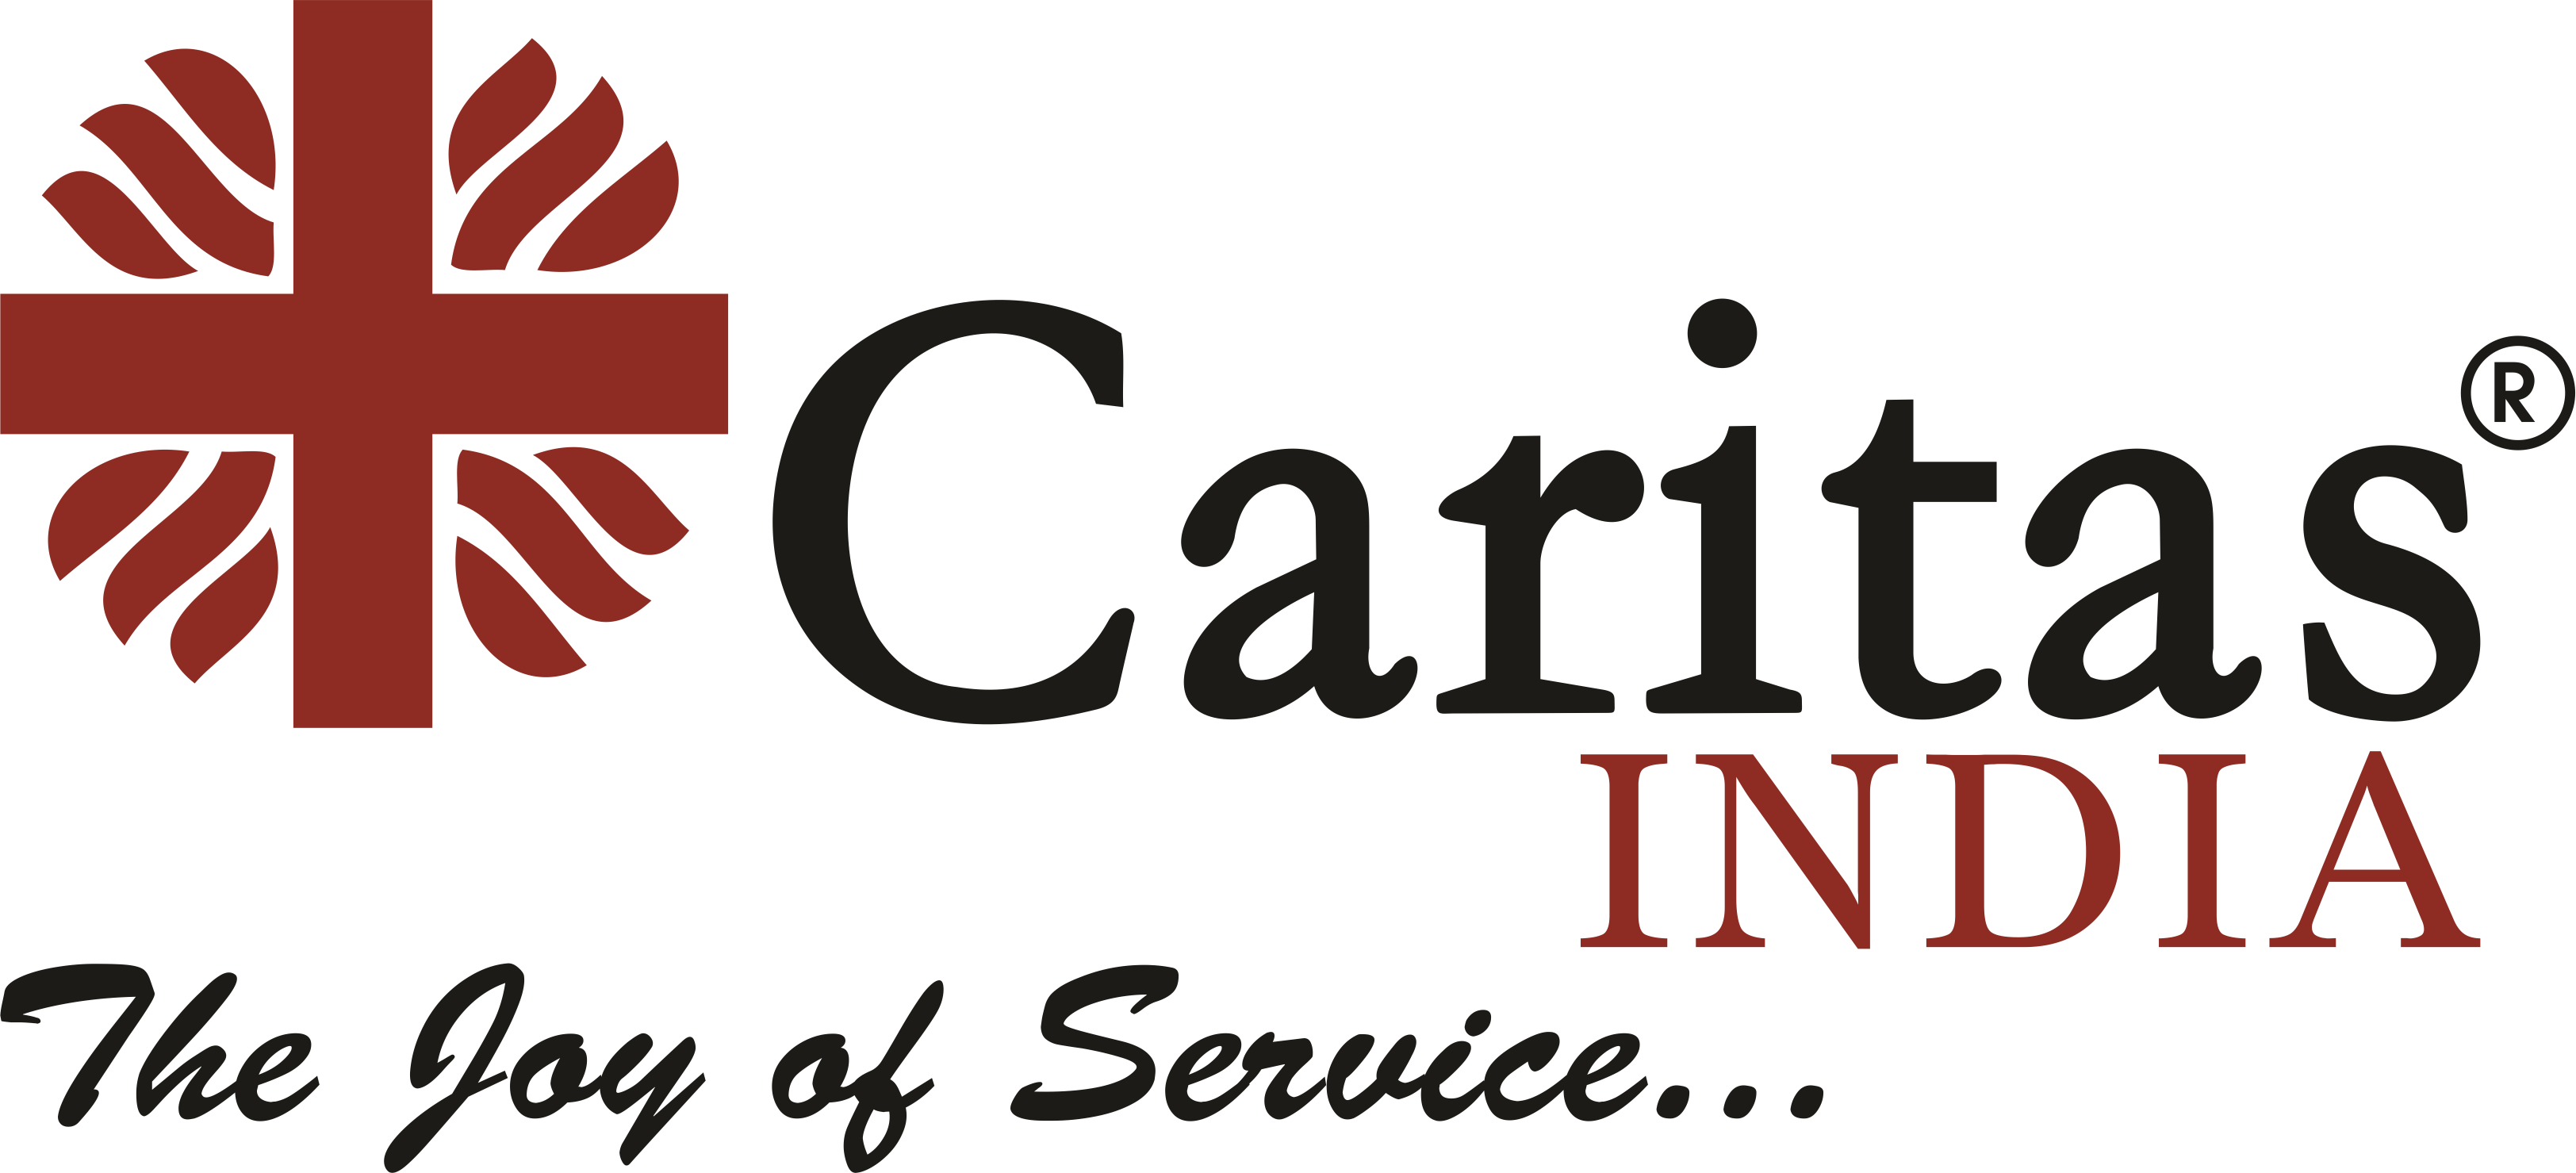 Caritas India Logo1